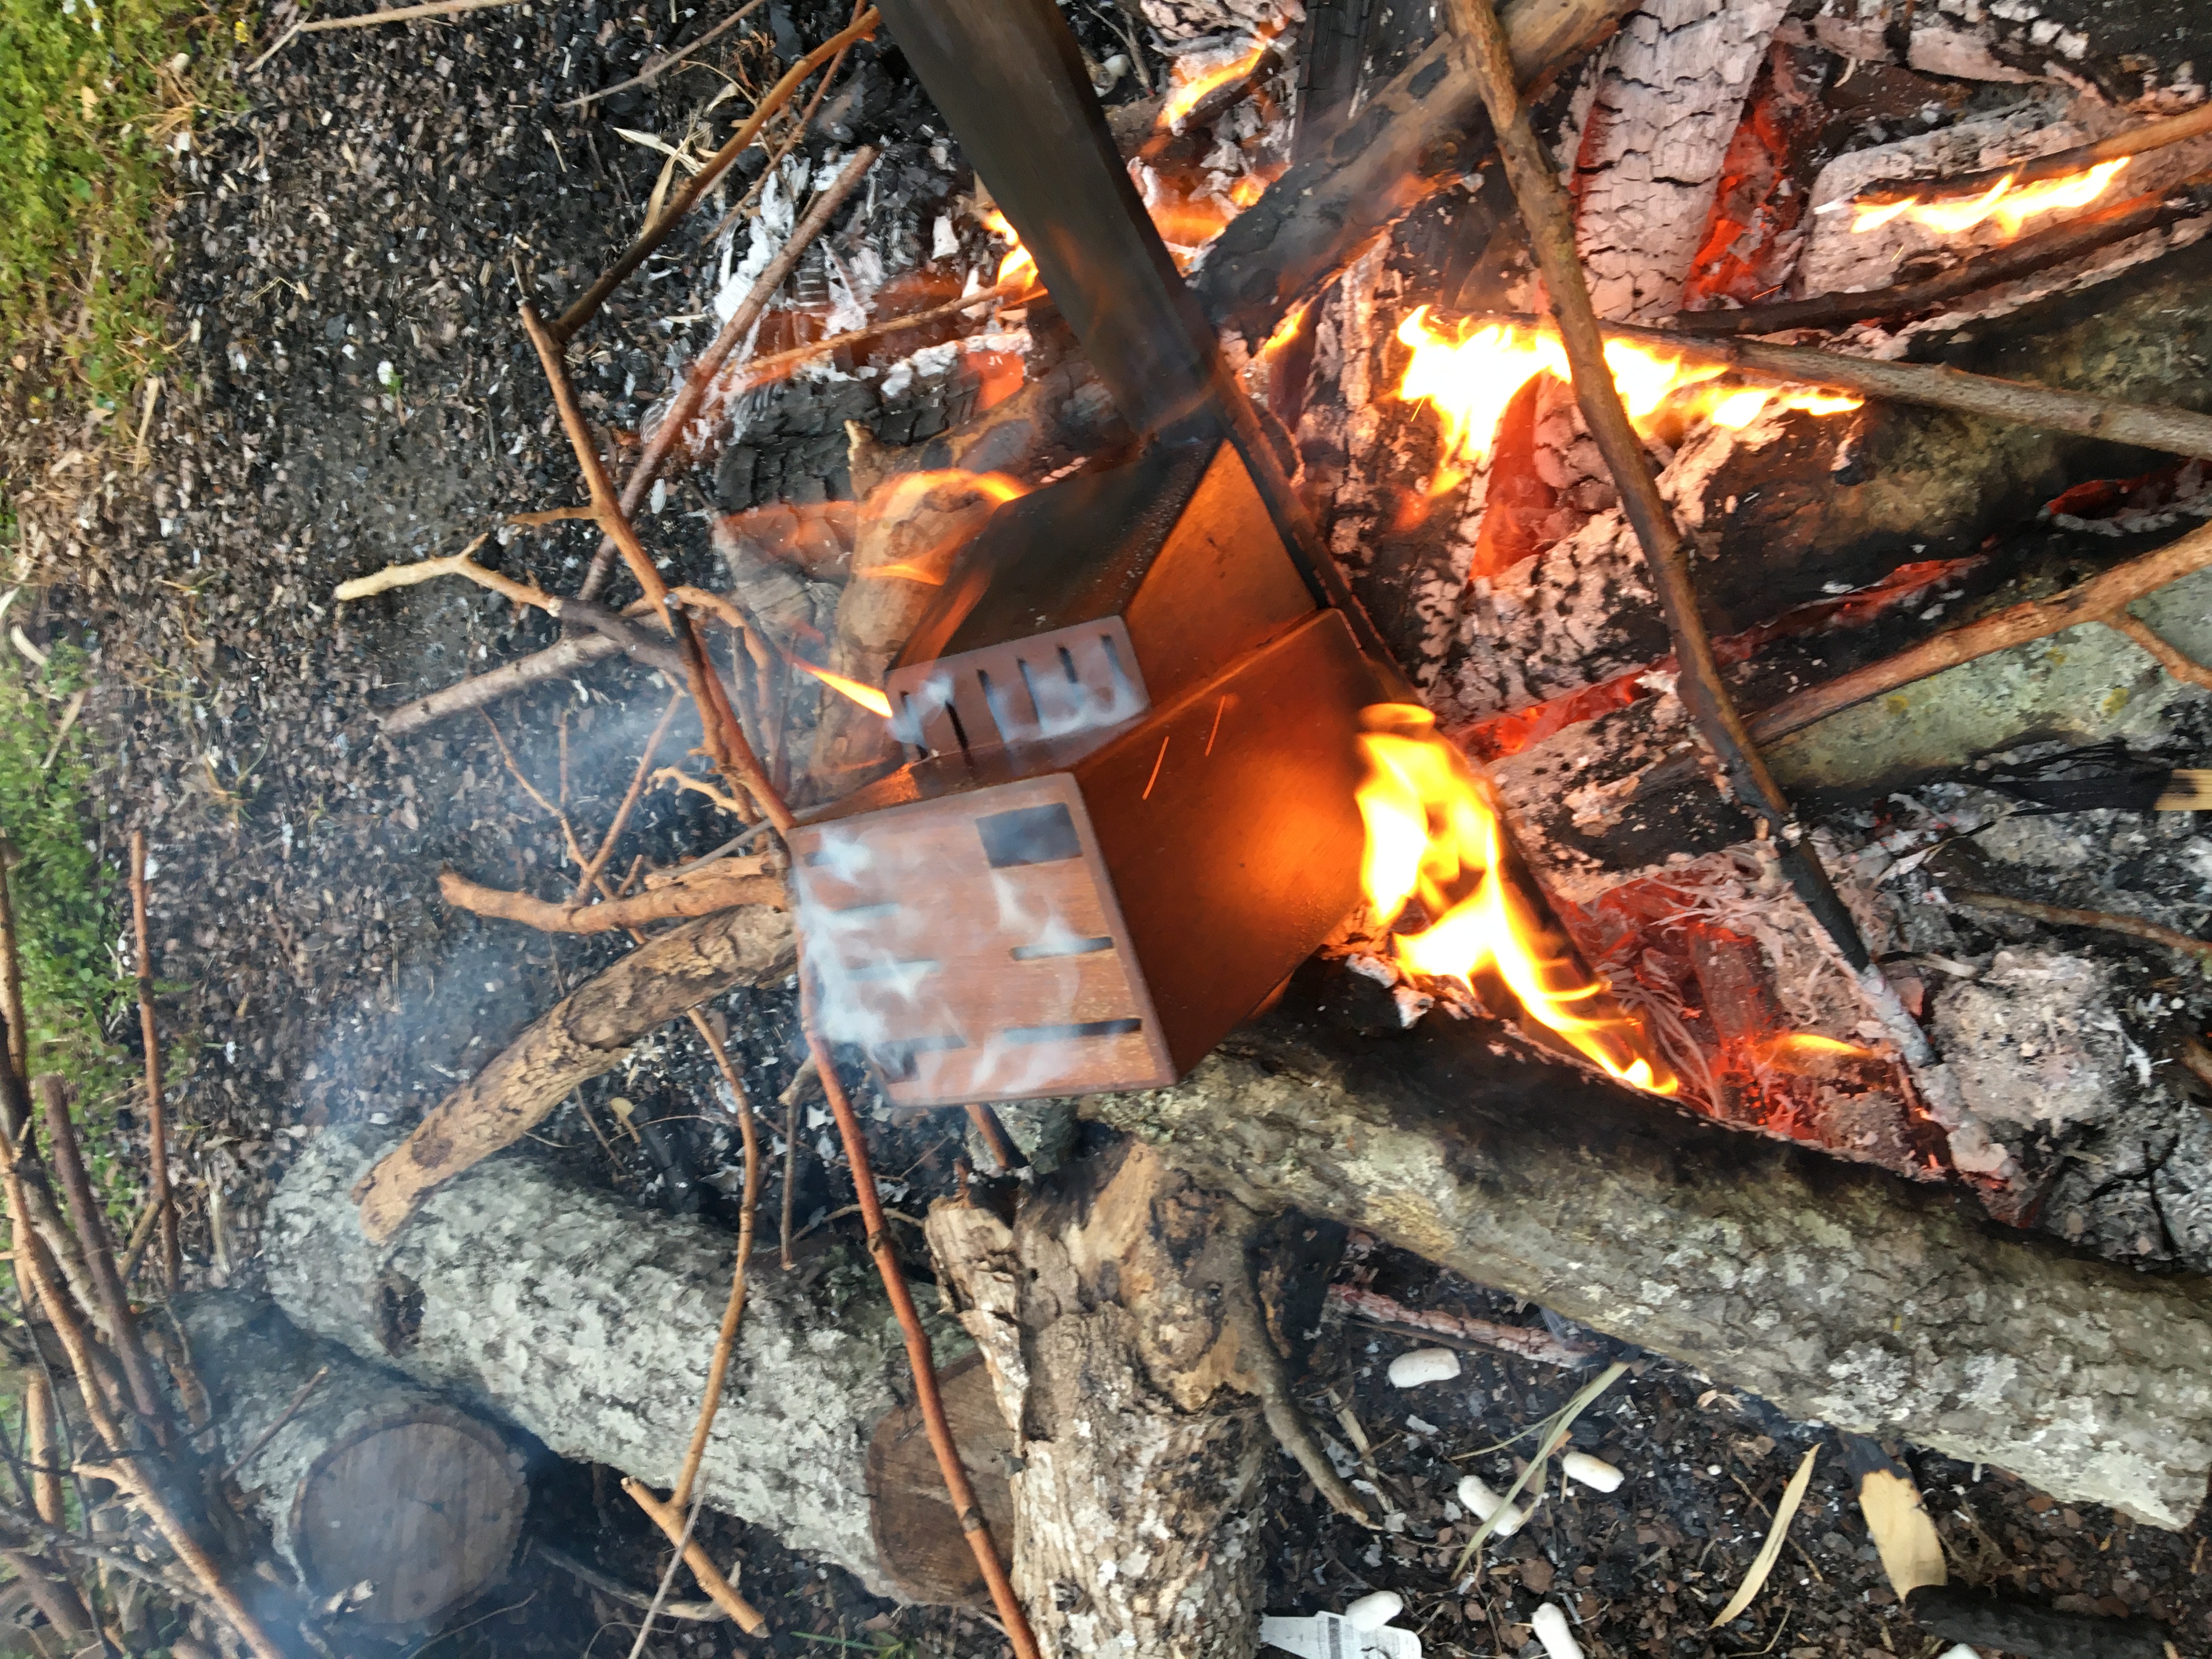 a knifeblock smoking in a bonfire